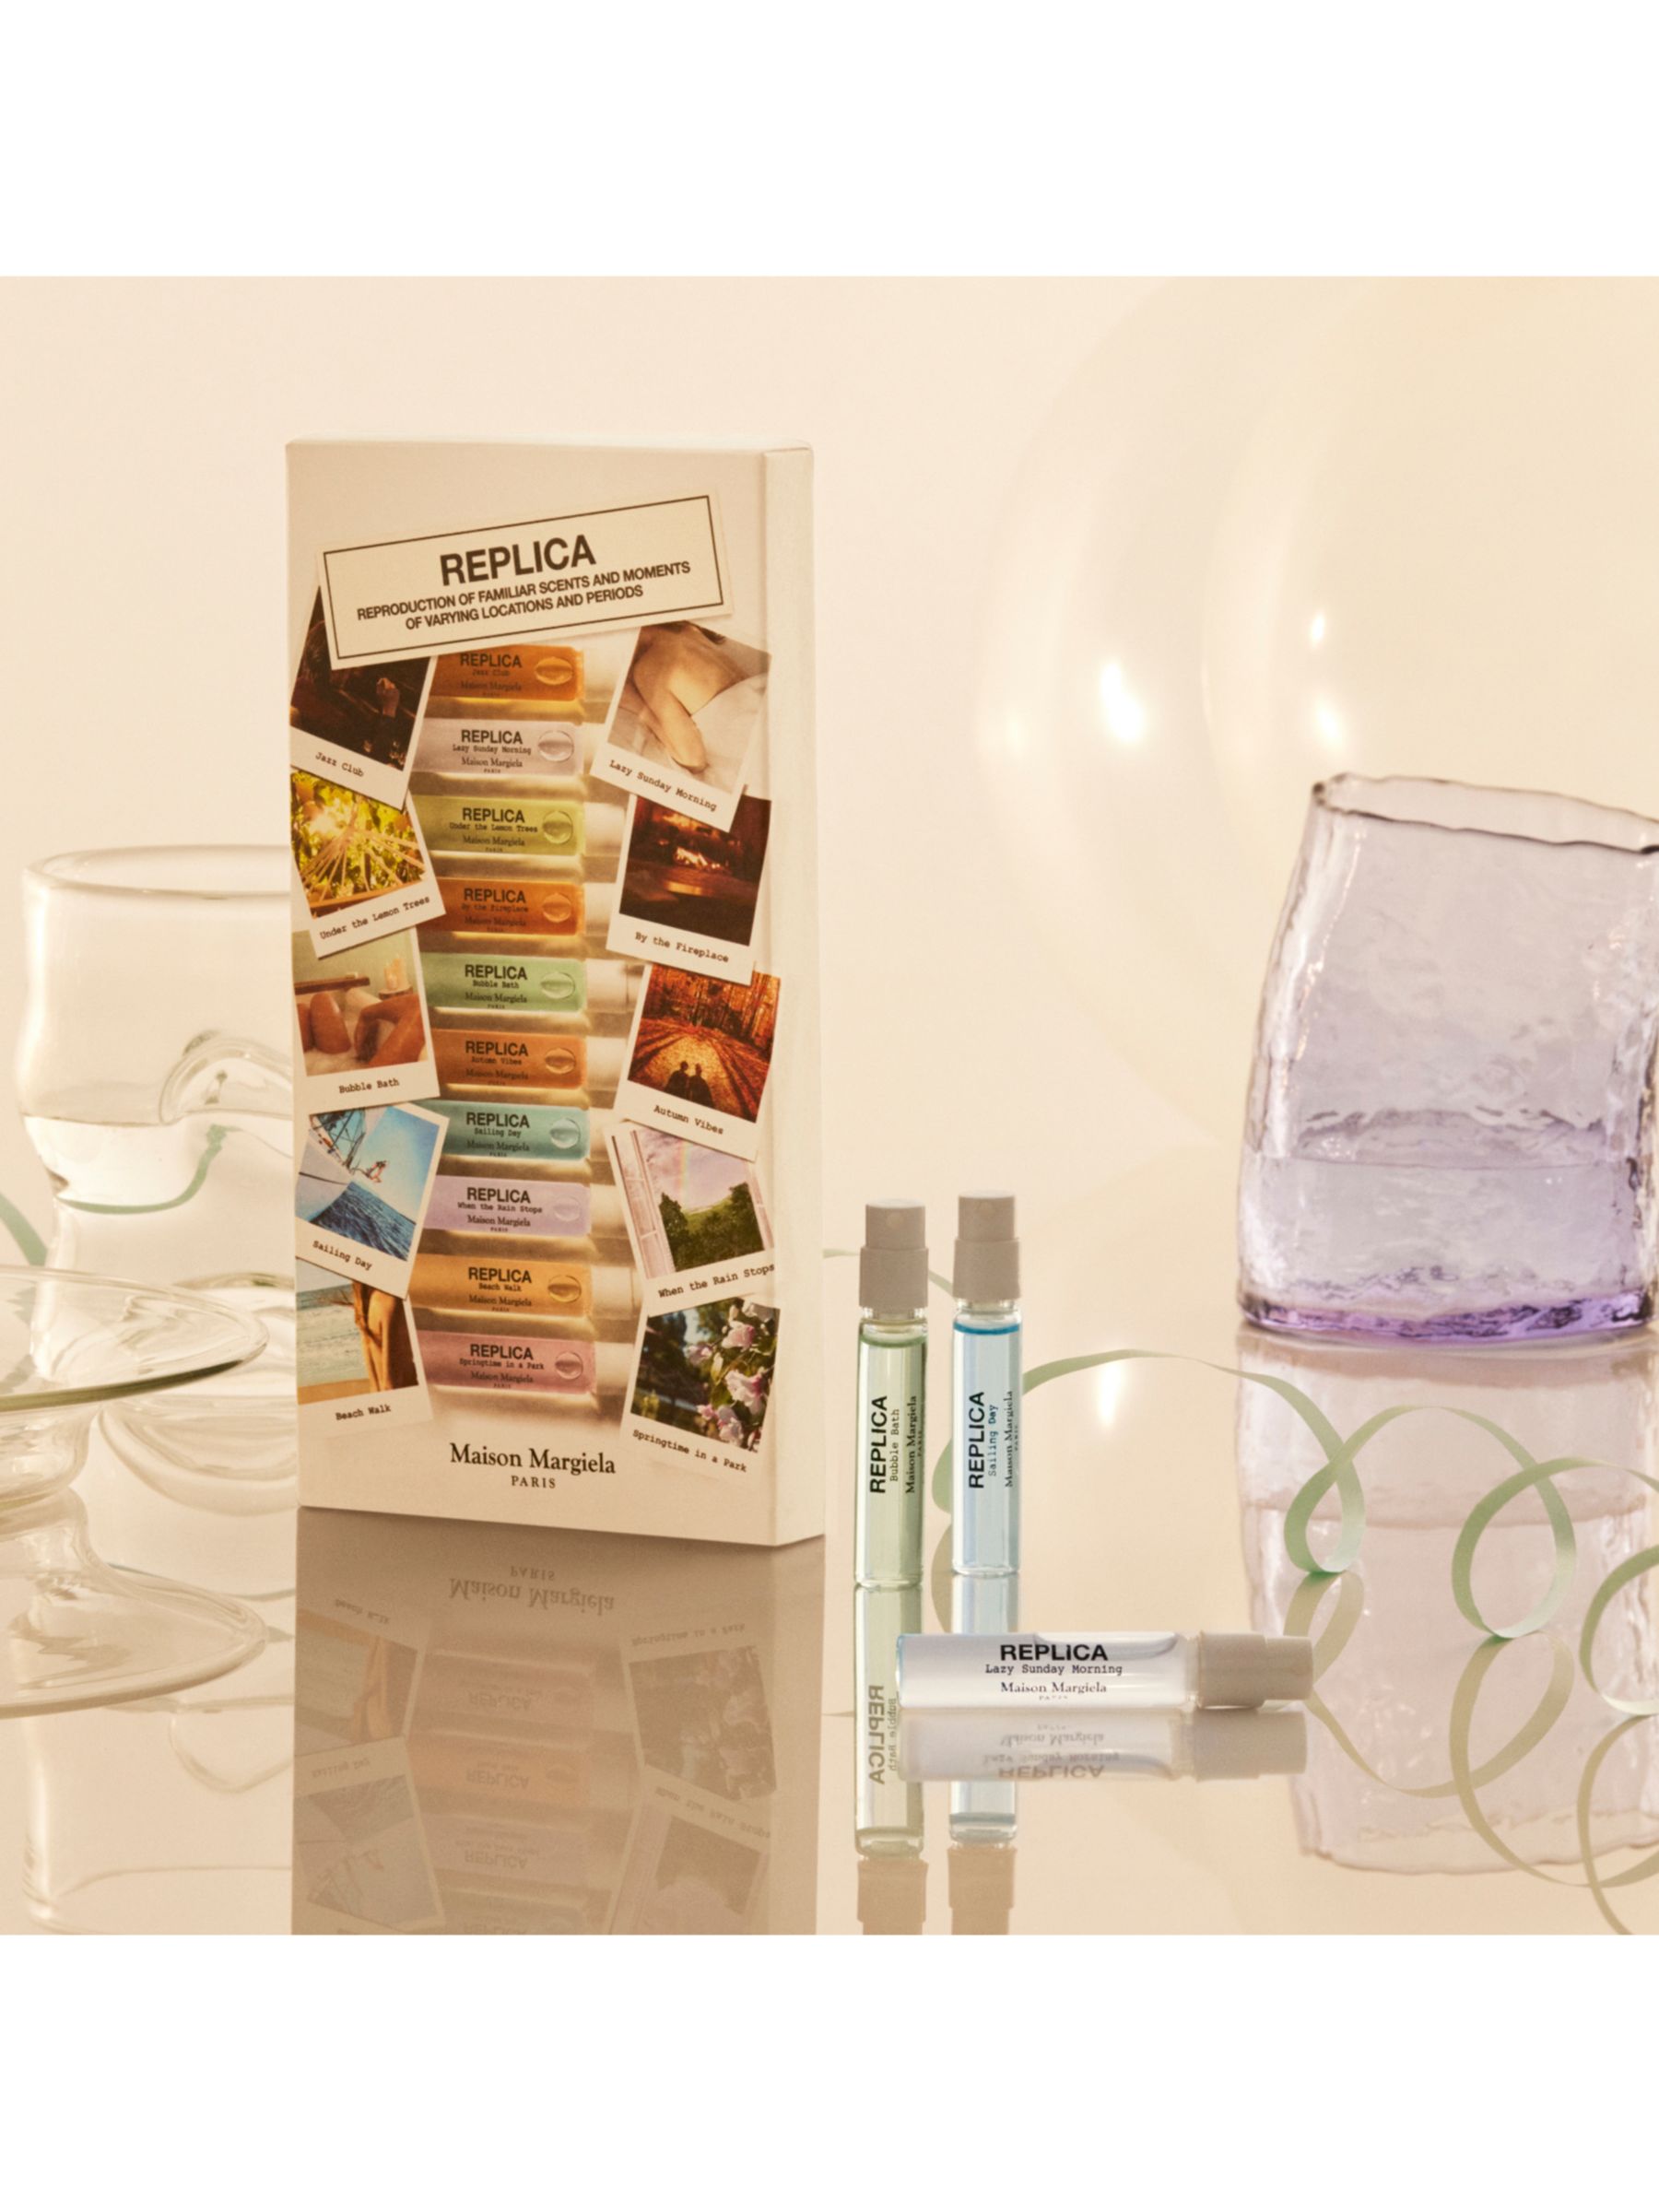 Maison Margiela Replica Memory Box Fragrance Discovery Gift Set 4